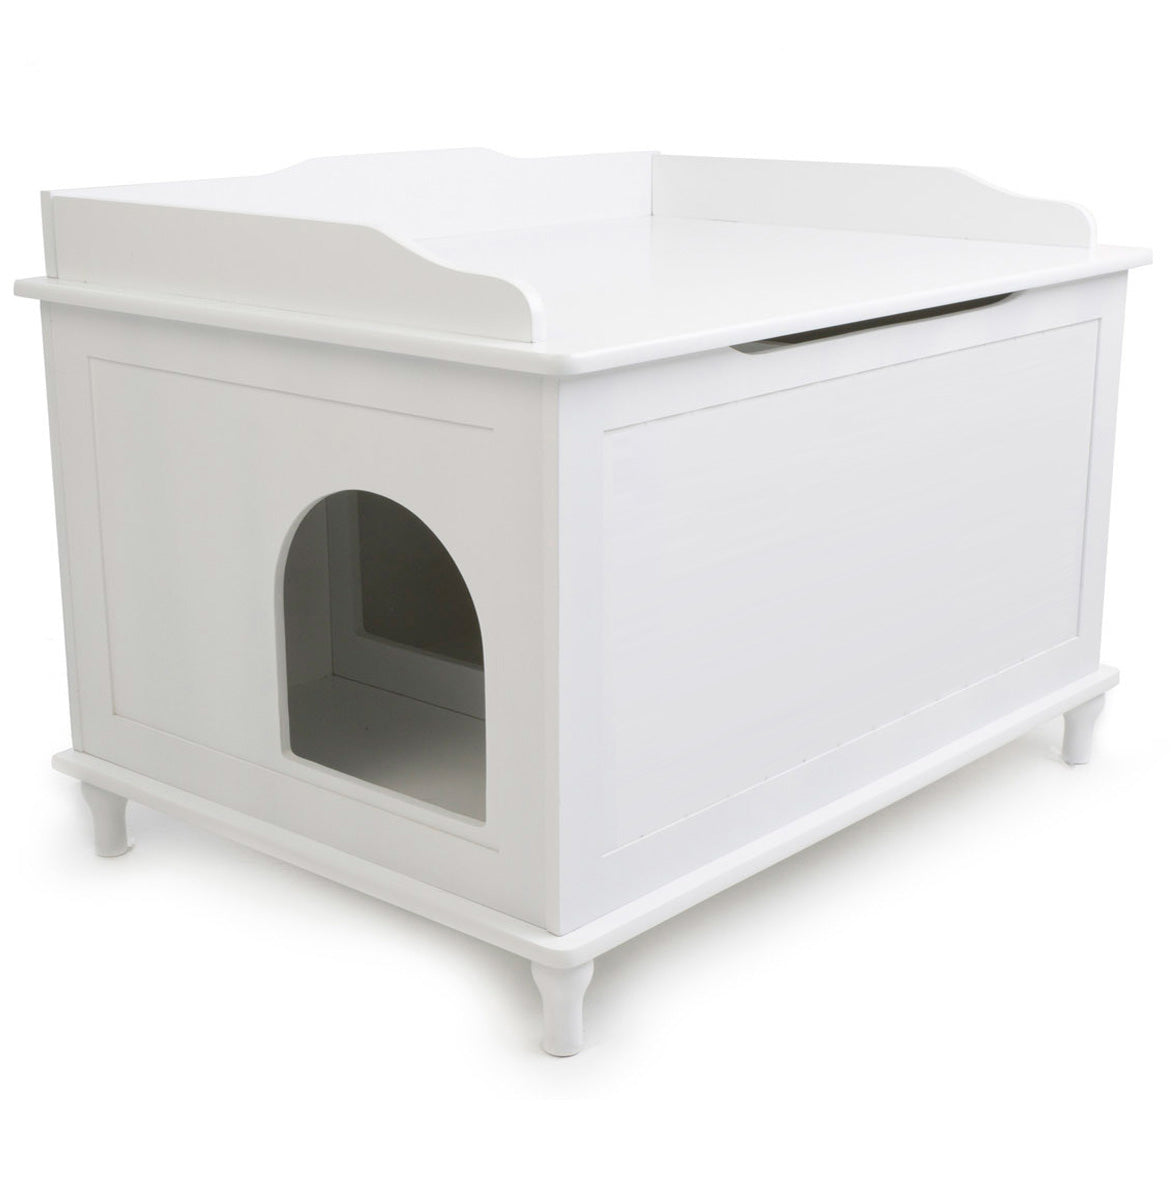 Designer Pet Products Jumbo Catbox Litter Box Enclosure in White